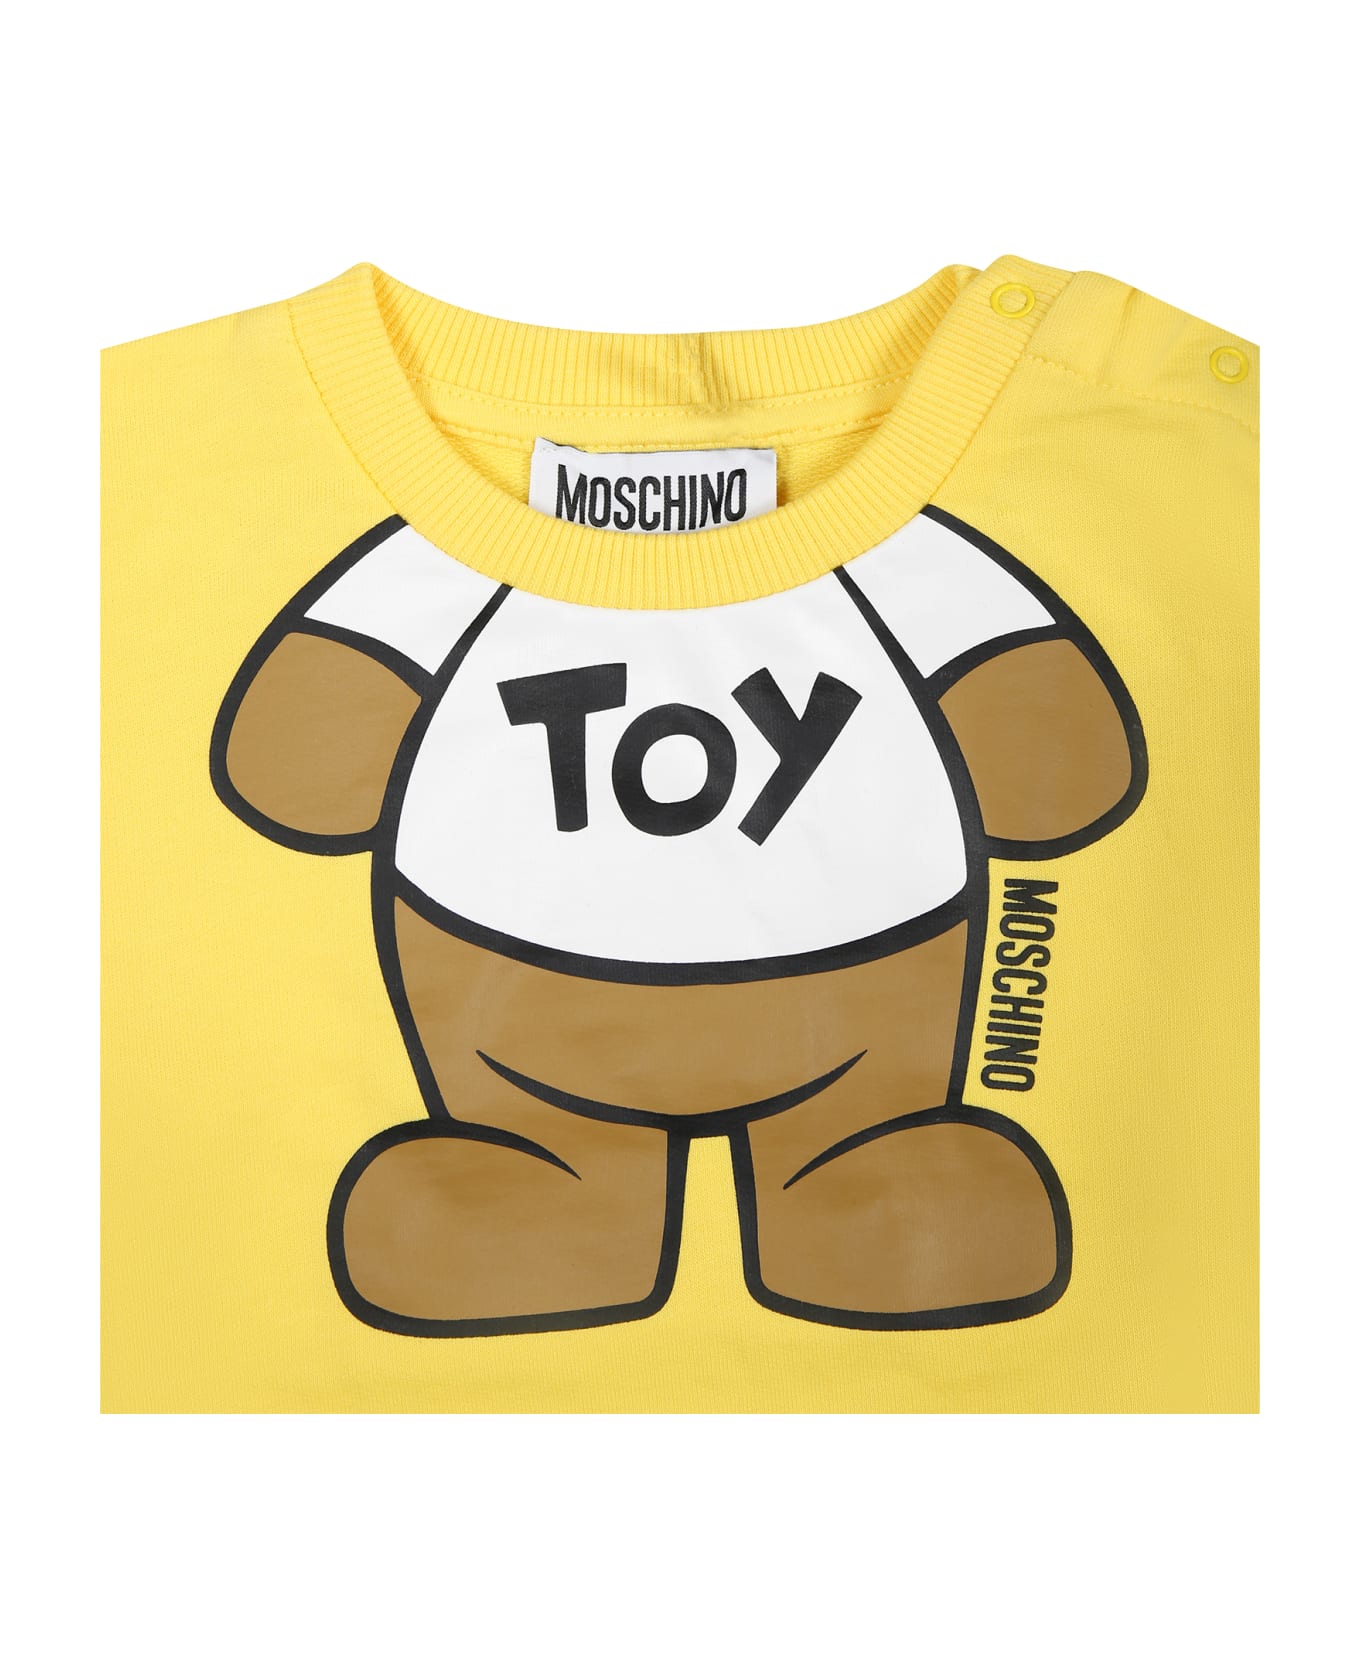 Moschino Yellow Sweatshirt For Babies With Teddy Bear - Yellow